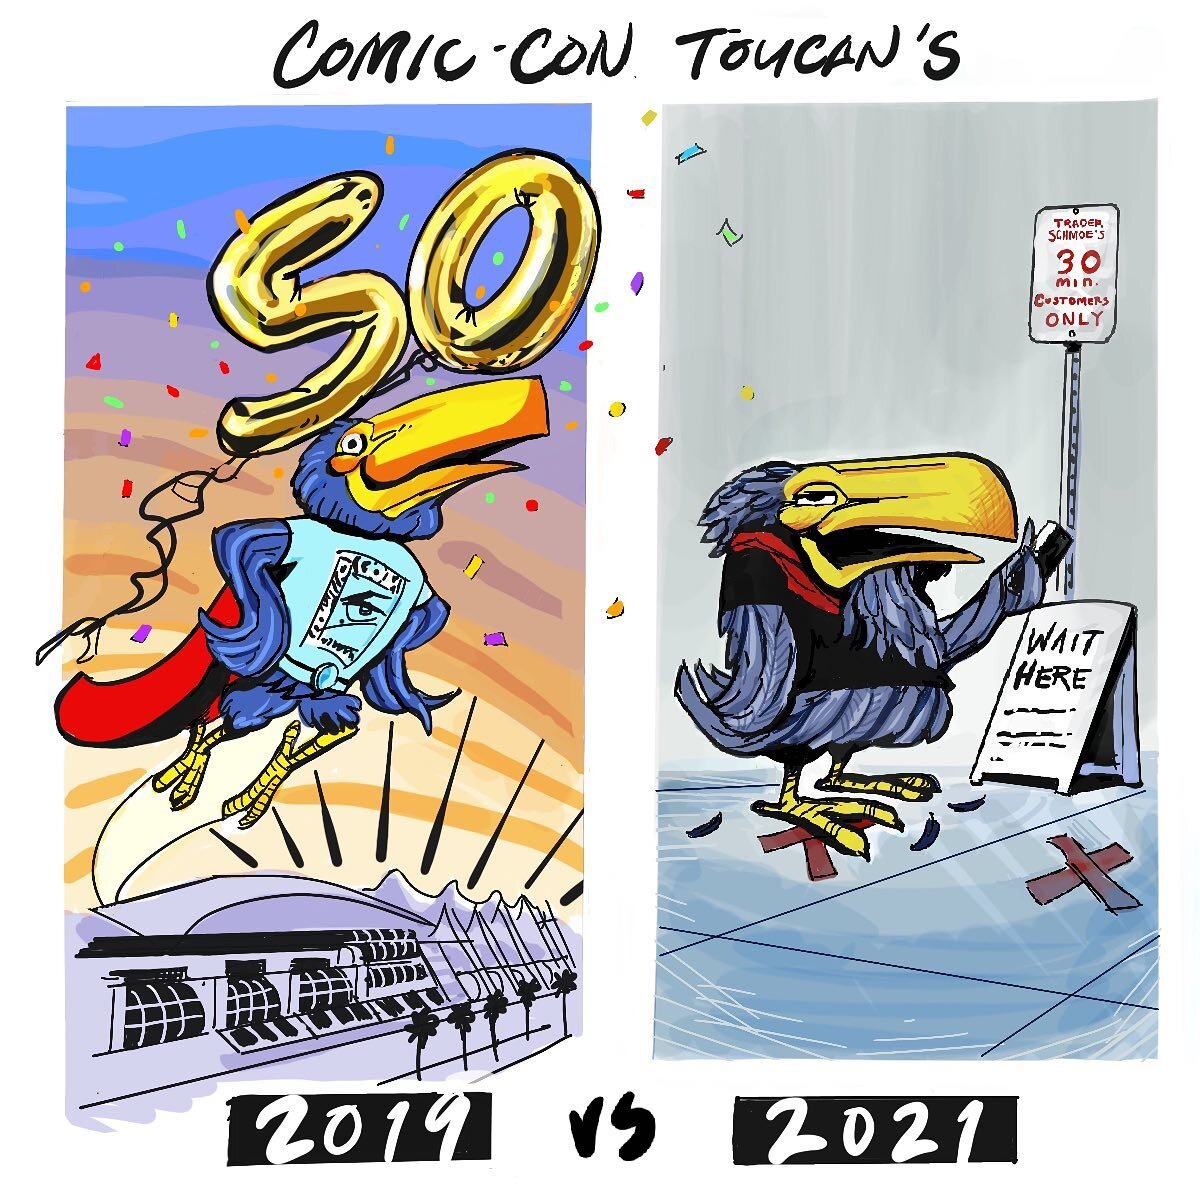 Comic strip of San Diego Comic-Con and its cartoony mascot...

#comiccontoucan #toucansofinstagram #sandiegocomiccon #tbt #funnydrawings #comicstripart #digitalillustration #happythursdayeveryone #mascotlife #procreatedrawing #funny #superheroart